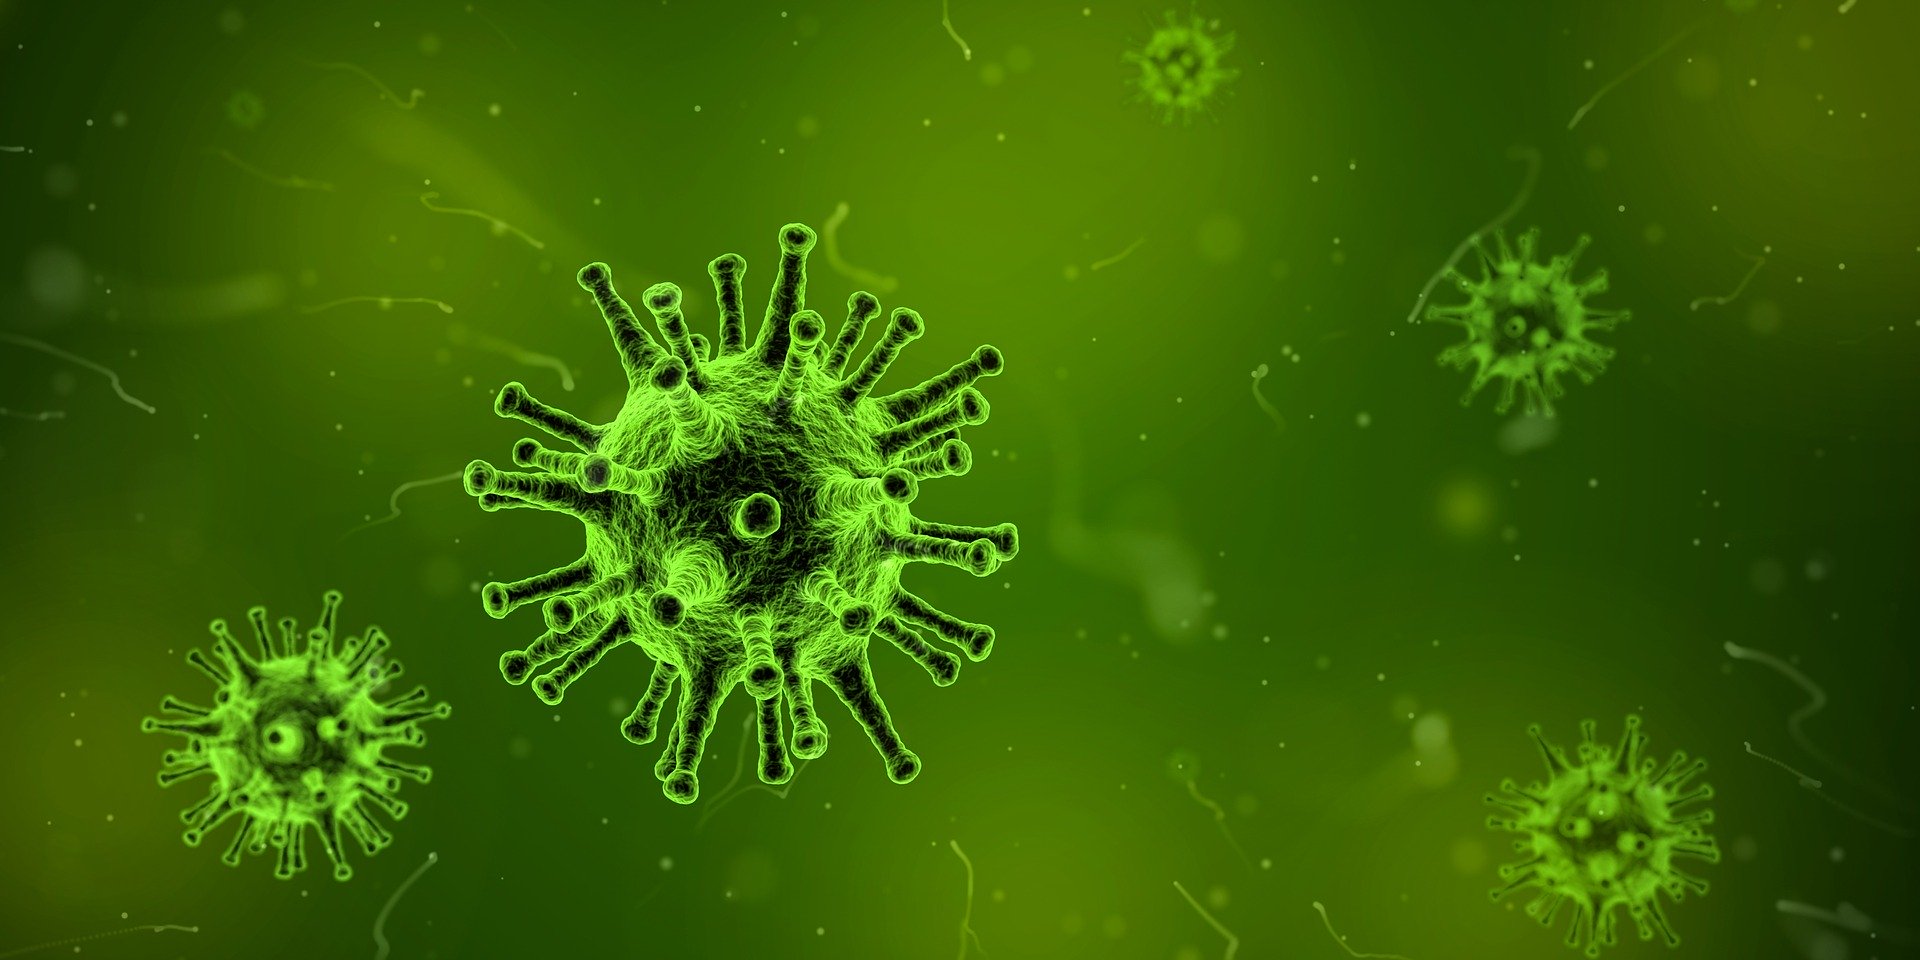 Virus under the microscope, visually similar to COVD-19